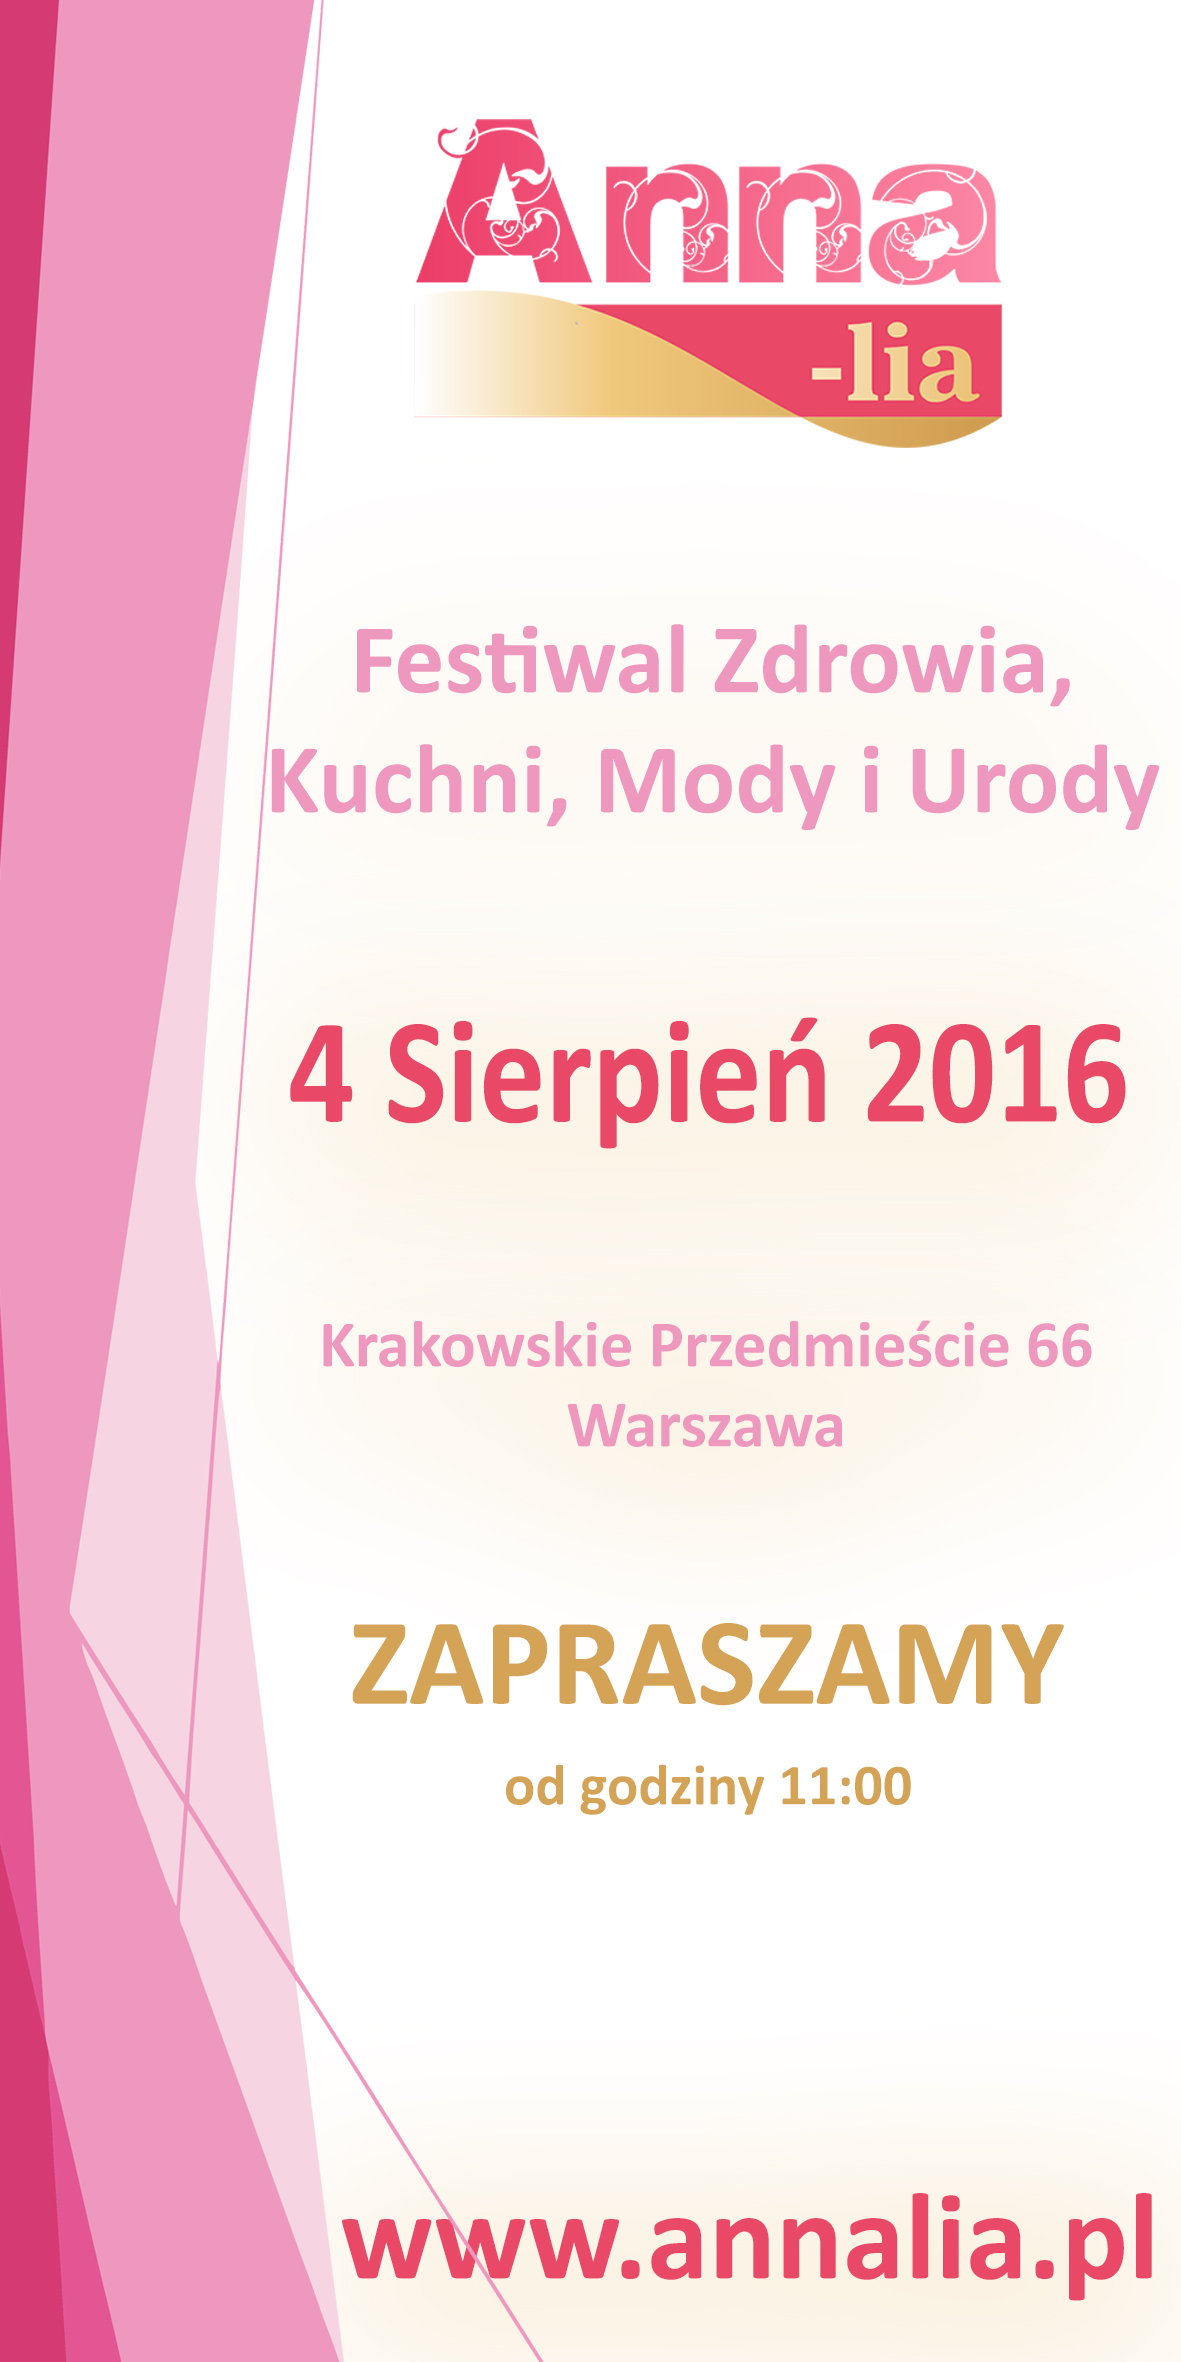 ANNA-lia 2016 Festiwal Zdrowia, Kuchni, Mody i Urody